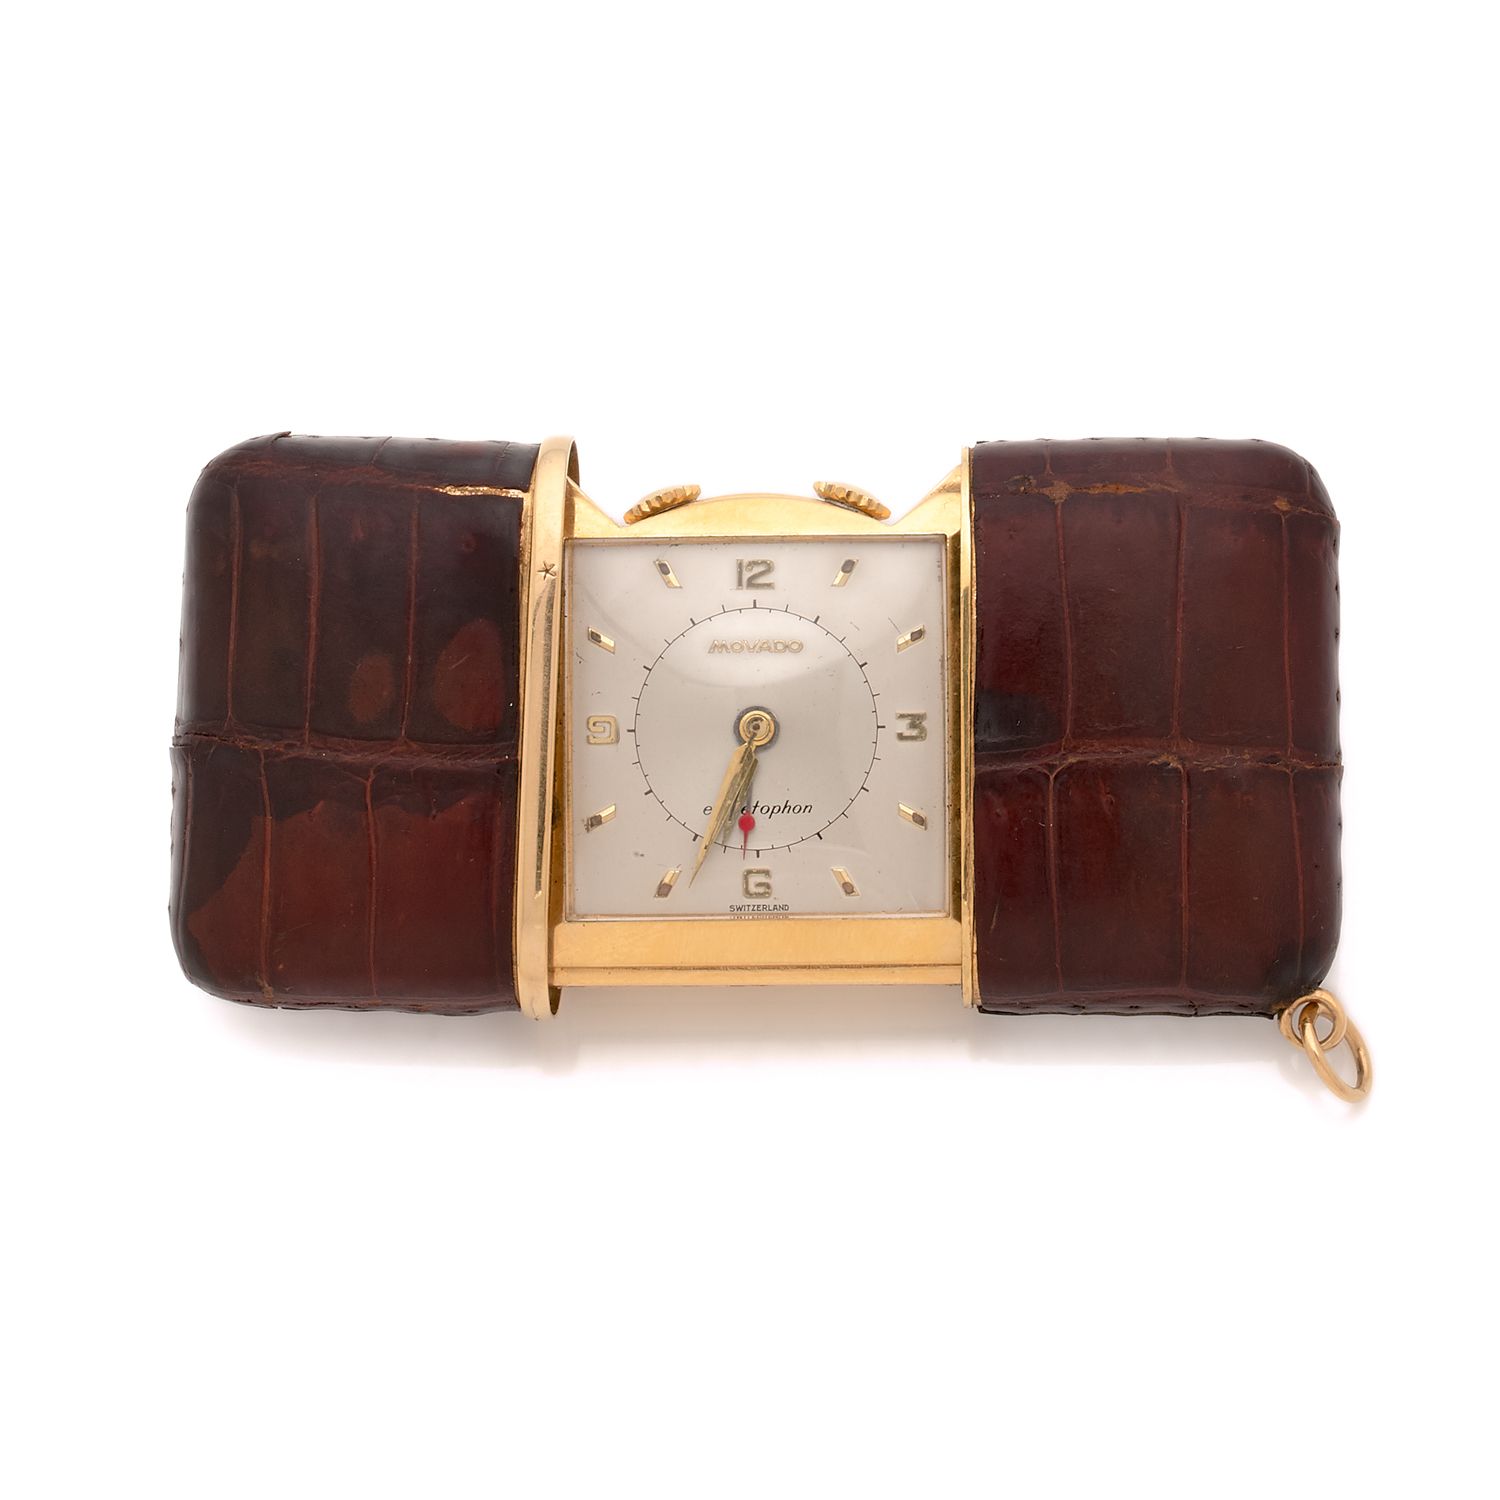 Null モモドル

鄂尔多斯市

1960'S

带闹钟的袋装手表。

箱子：黄色鎏金金属，带滑动开口，用皮革包裹。表盘：双色银色，带应用指数和叶形指针。

&hellip;